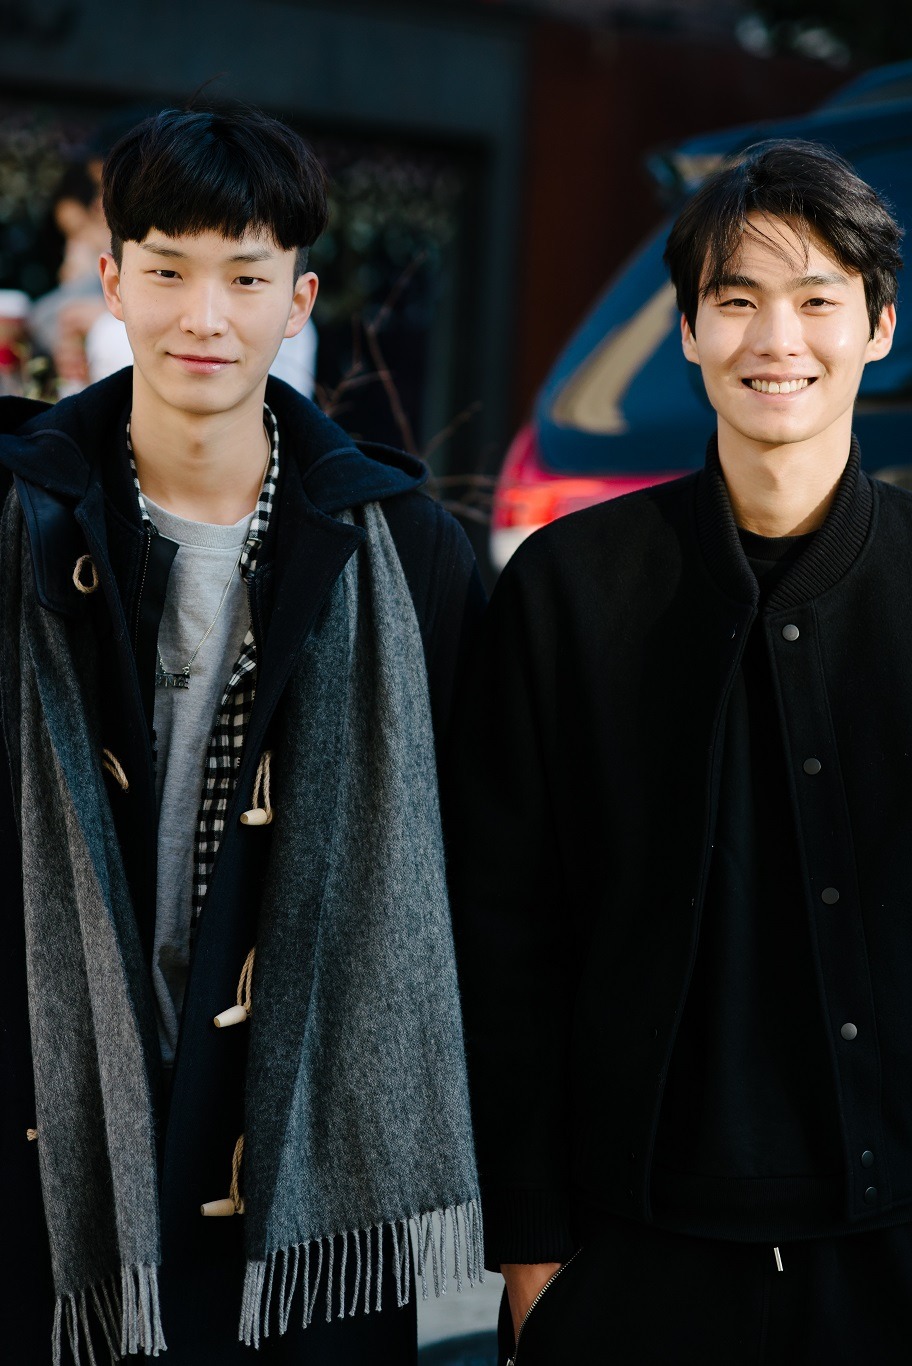 koreanmodel:  Street style: Ahn Seung Jun and Lee Yong Geun in Reebok Korea shot